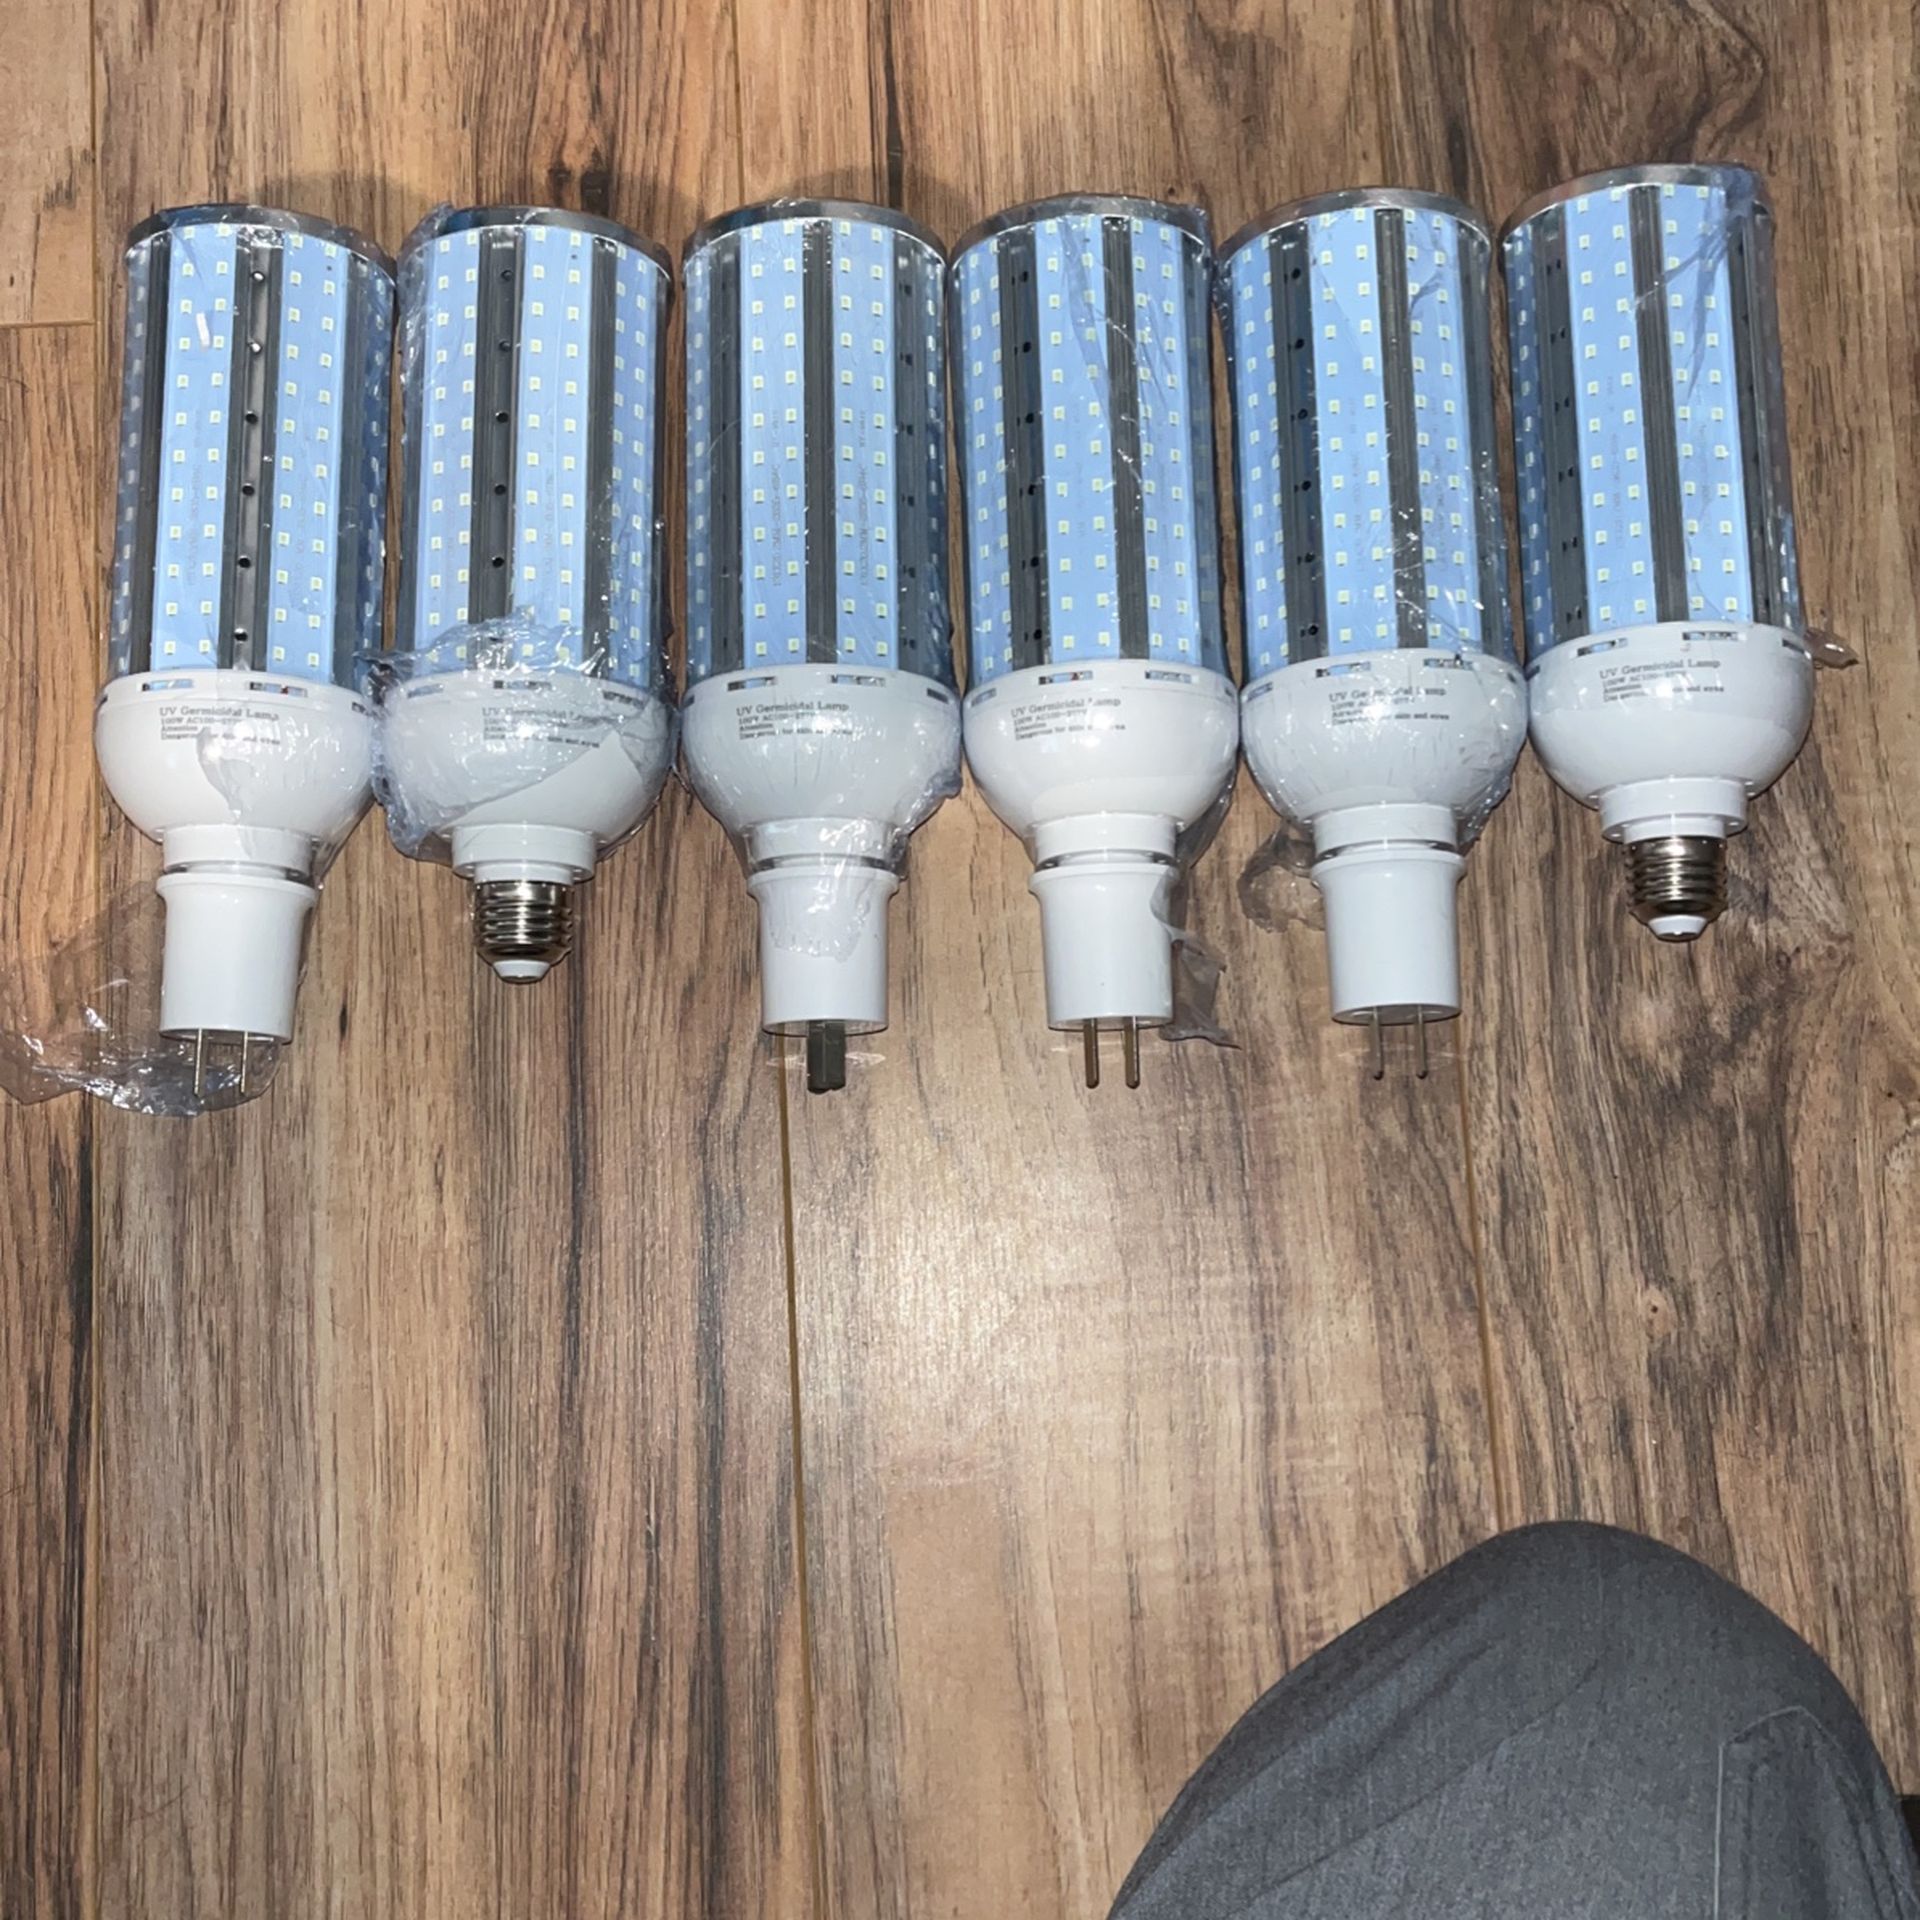 6 100 Watt UV GERMICIDAL LAMP BULBS. New